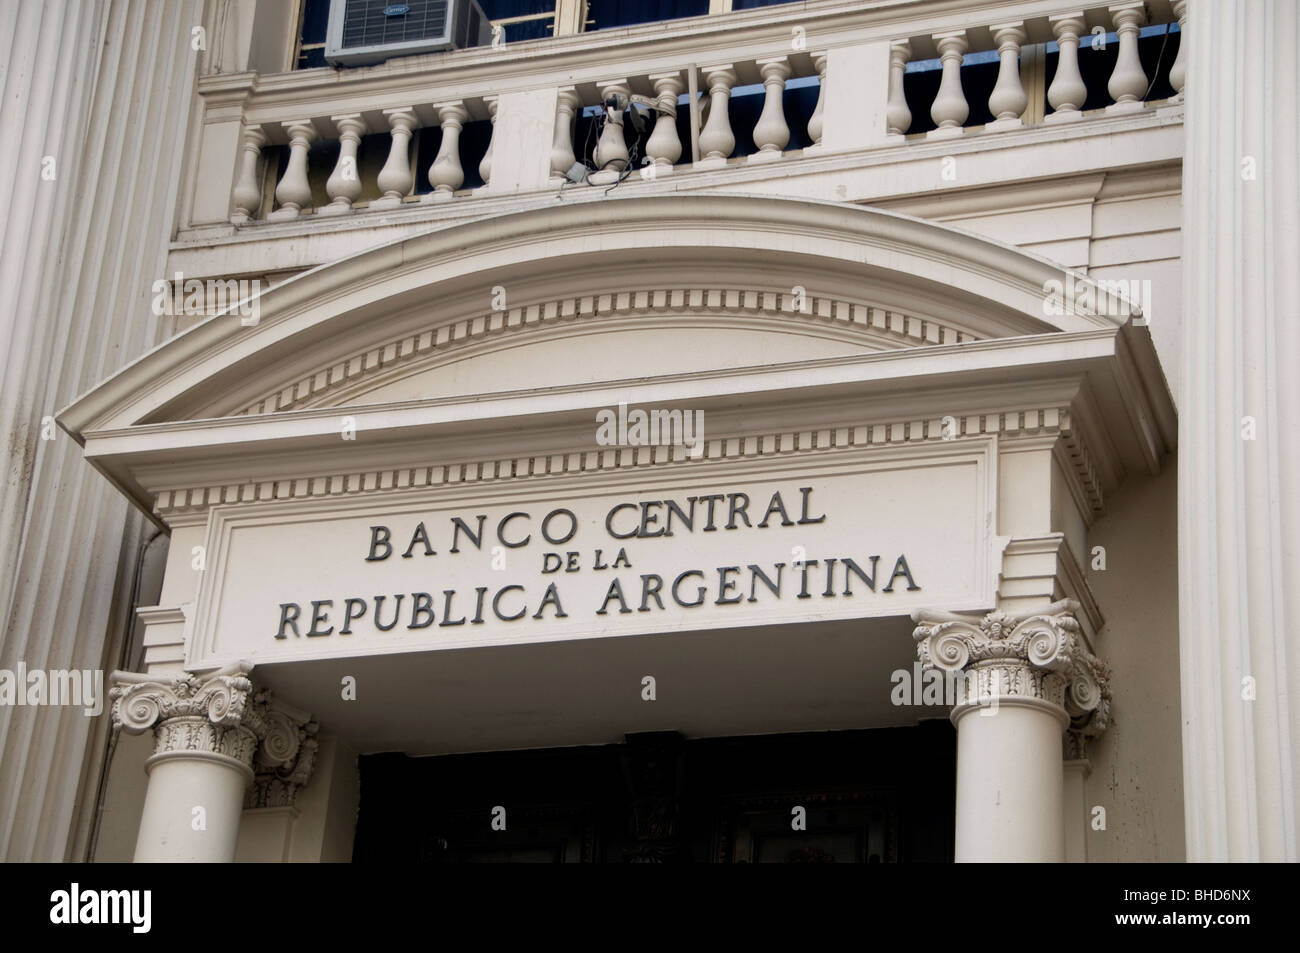 Buenos Aires National Central Bank of Argentina Banco Central de la Republica Argentina Stock Photo